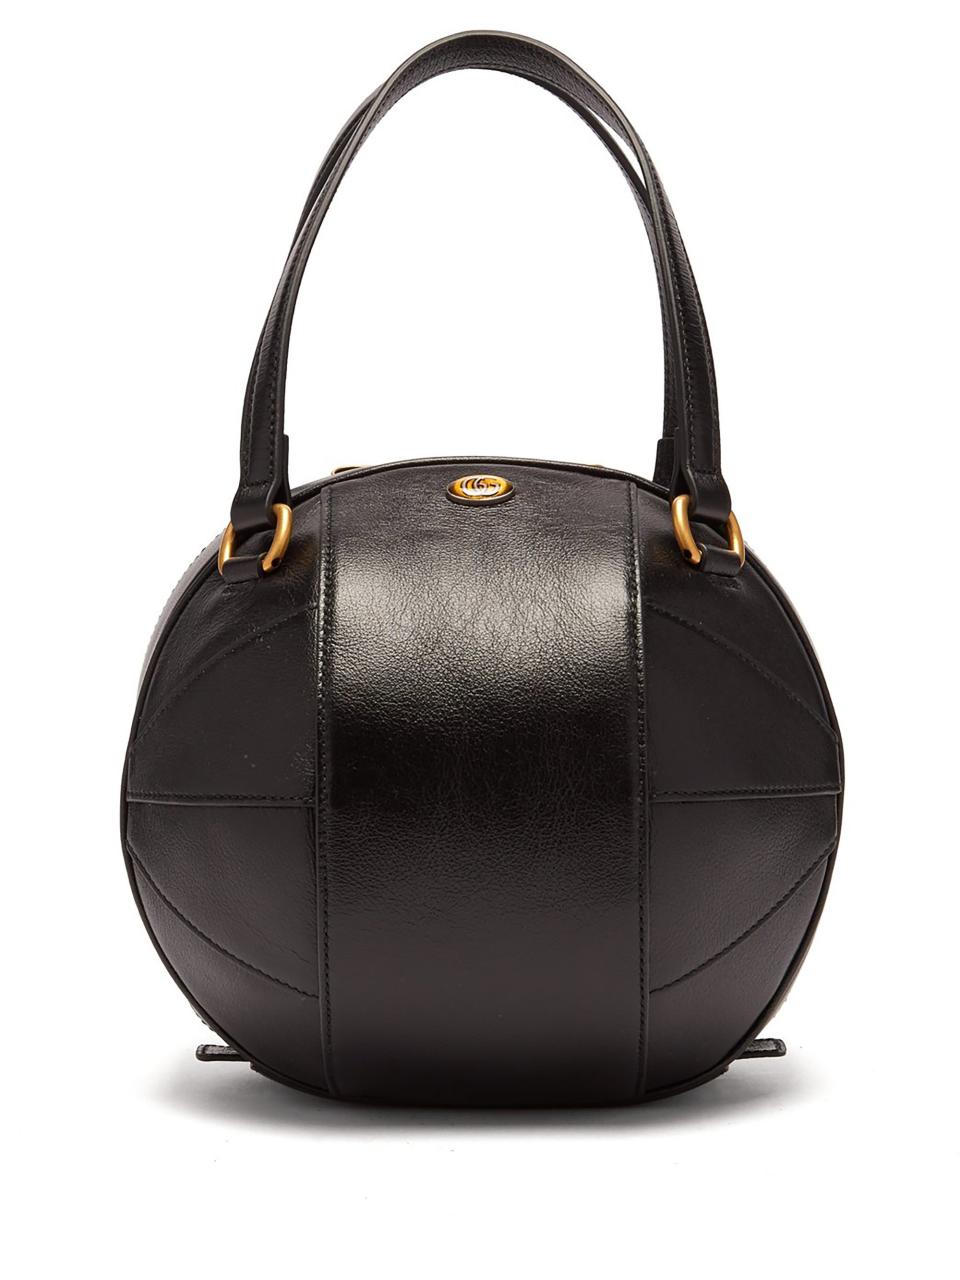 Gucci leather football bag (£1,420)